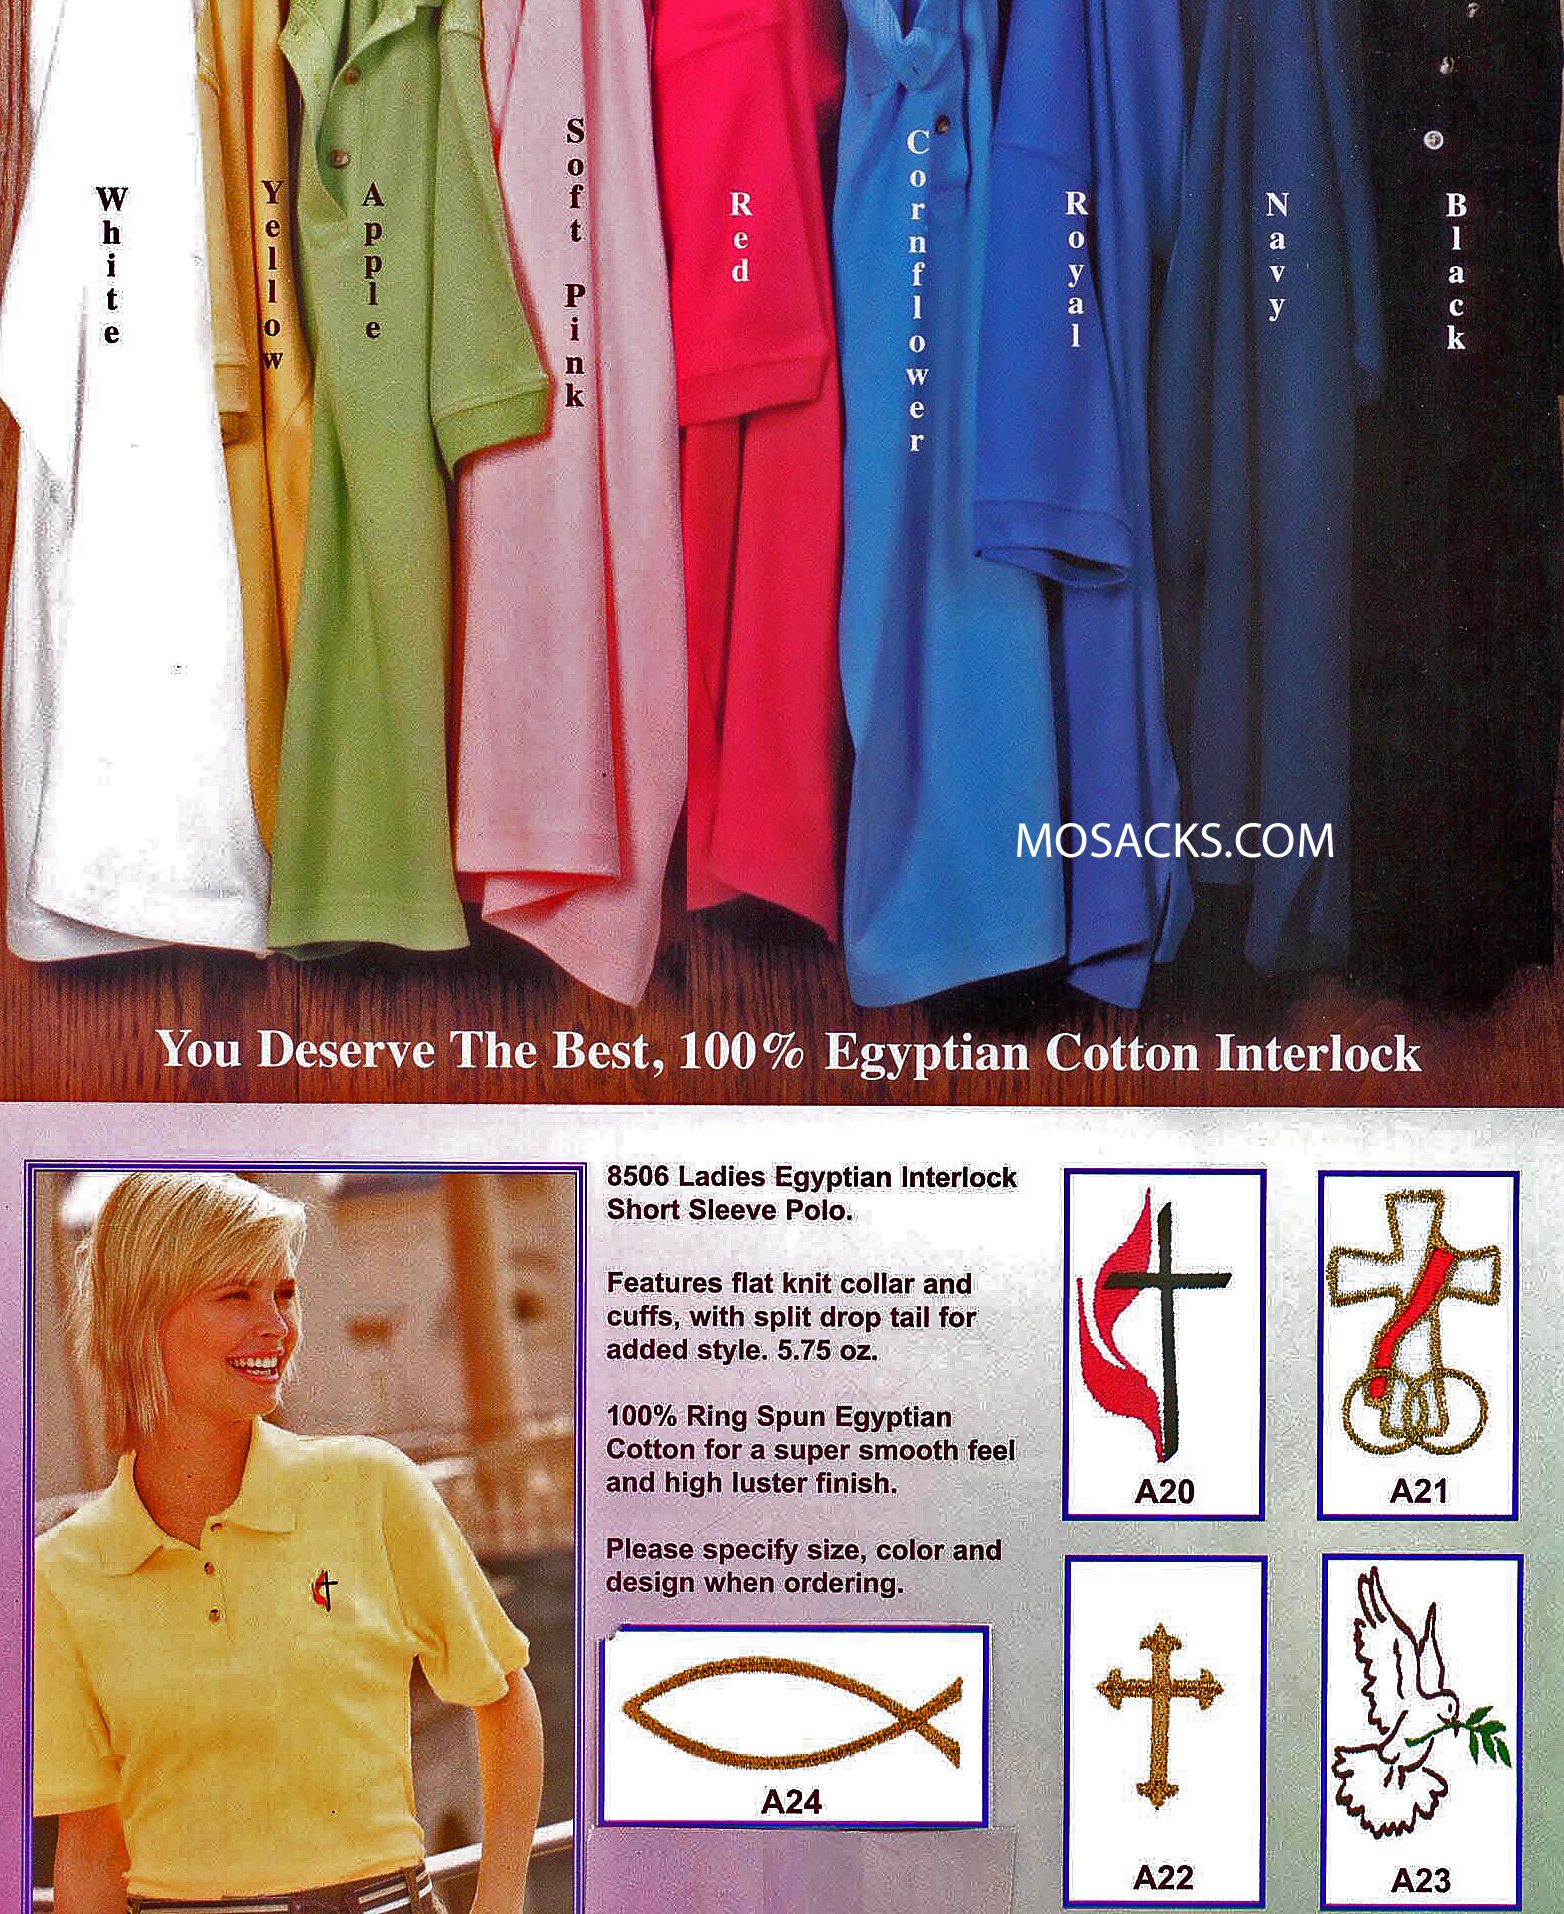 Beau Veste Women's Short Sleeve Polo Shirt